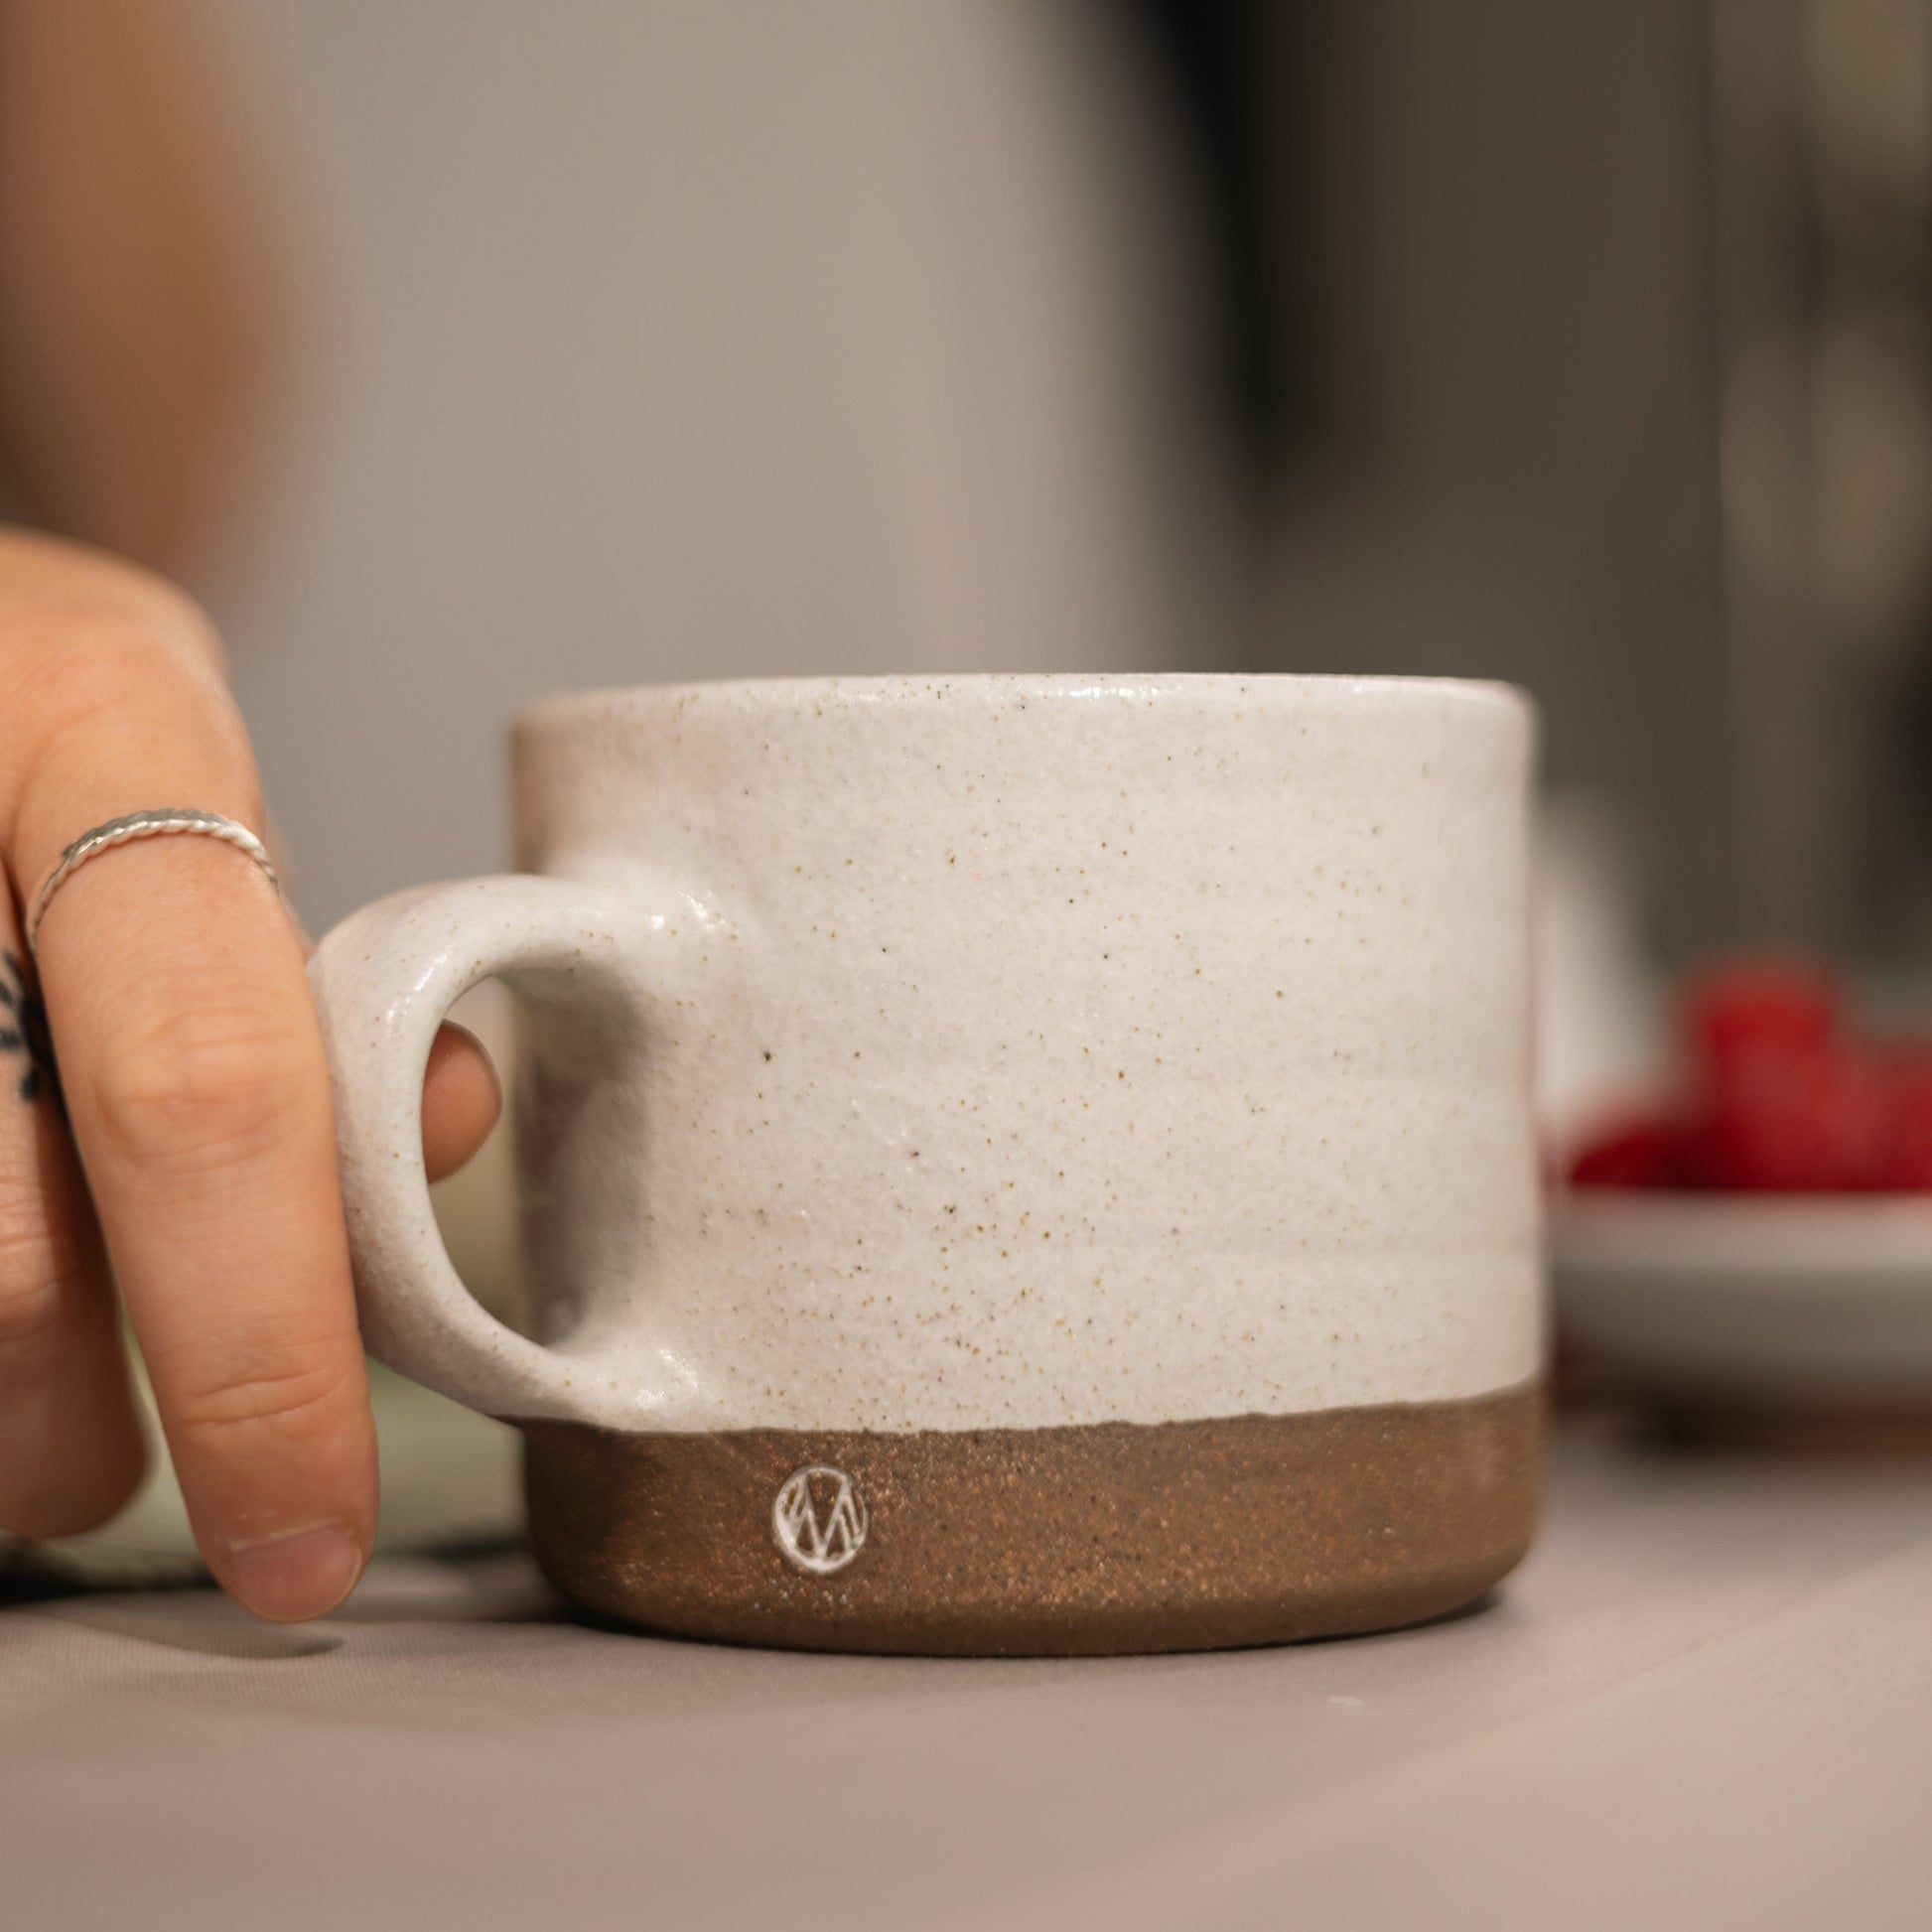 12oz hand made terracotta mug glazed in a white glaze